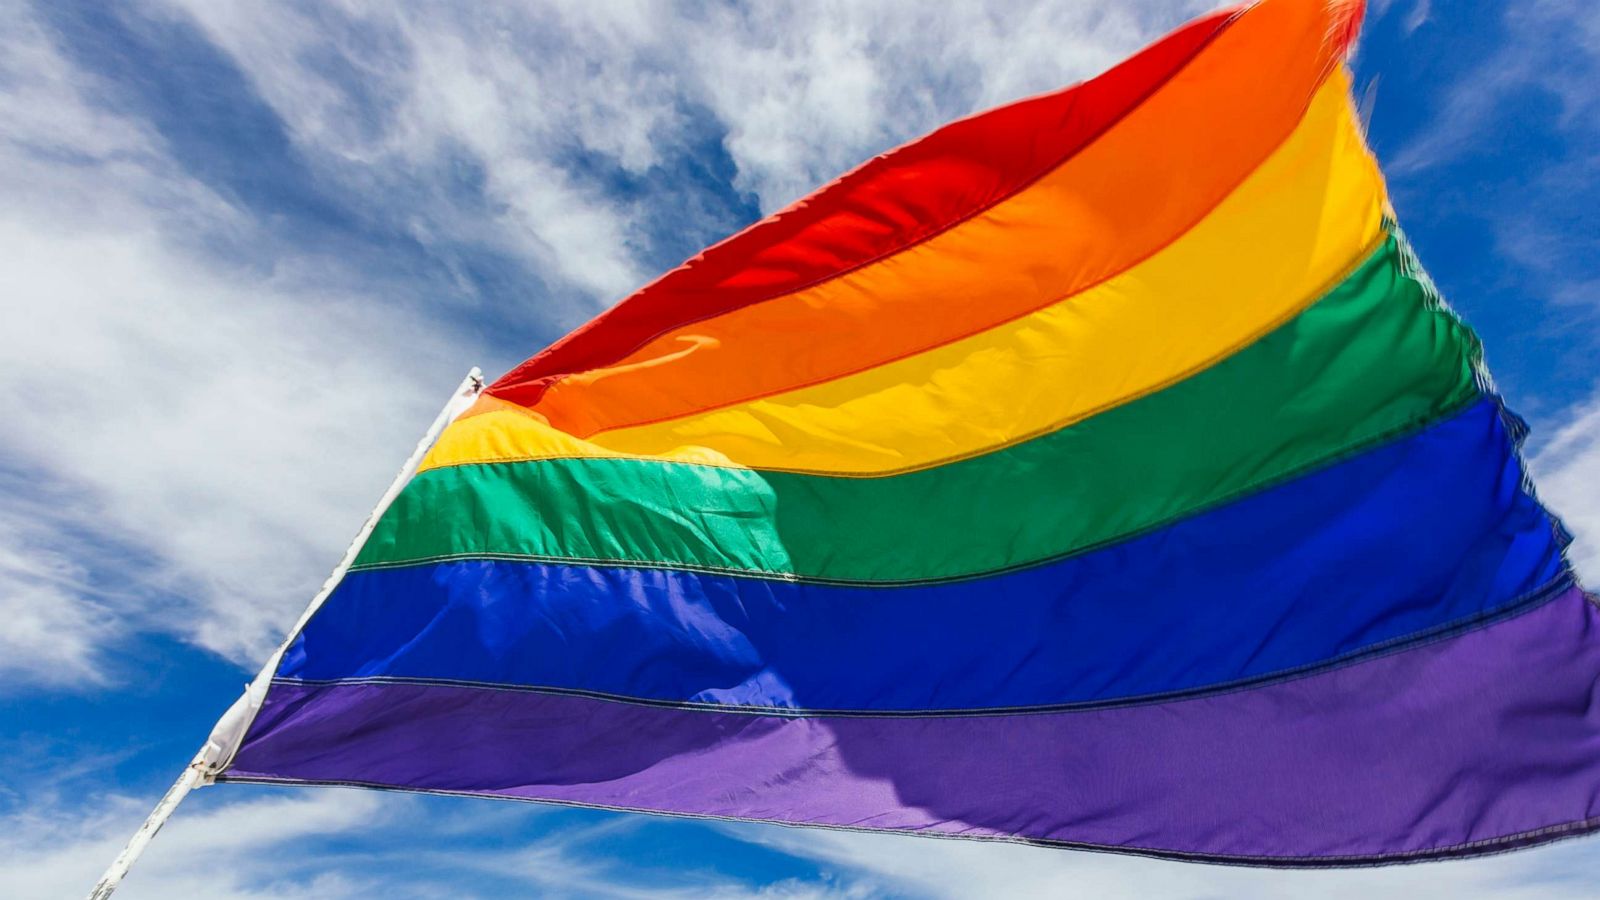 pride-flag-gty-thg-180924_hpMain_16x9_1600.jpg